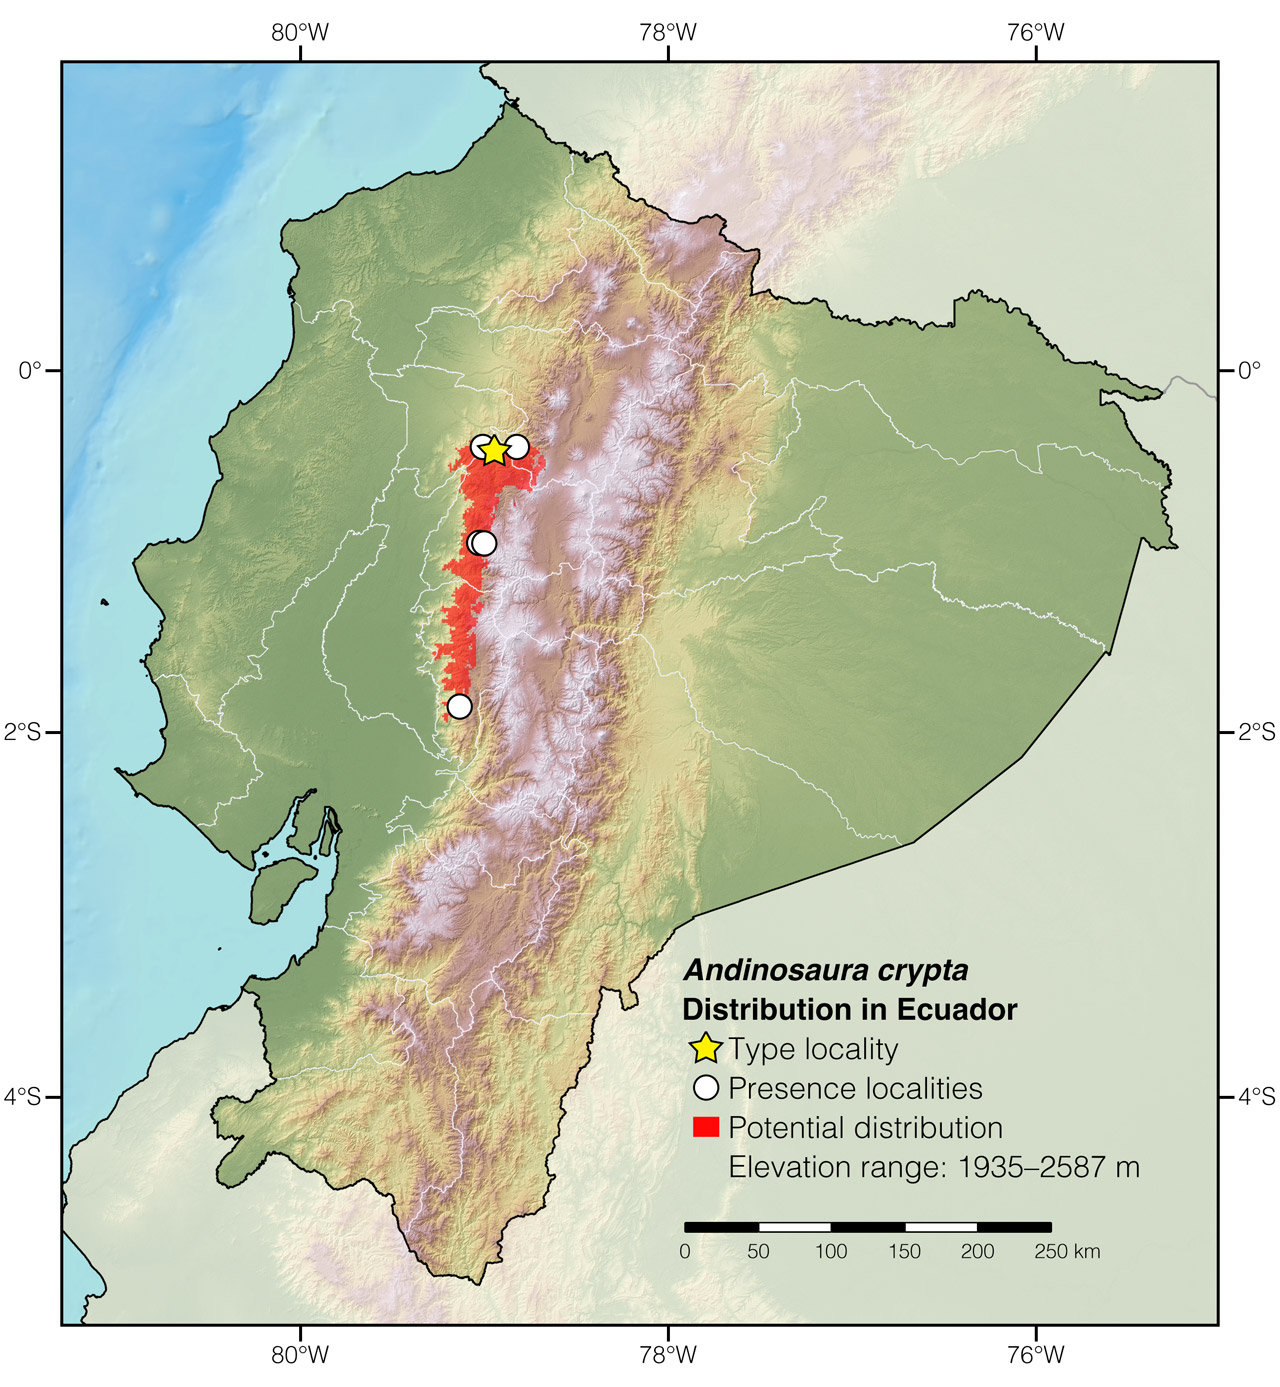 Distribution of Andinosaura crypta in Ecuador